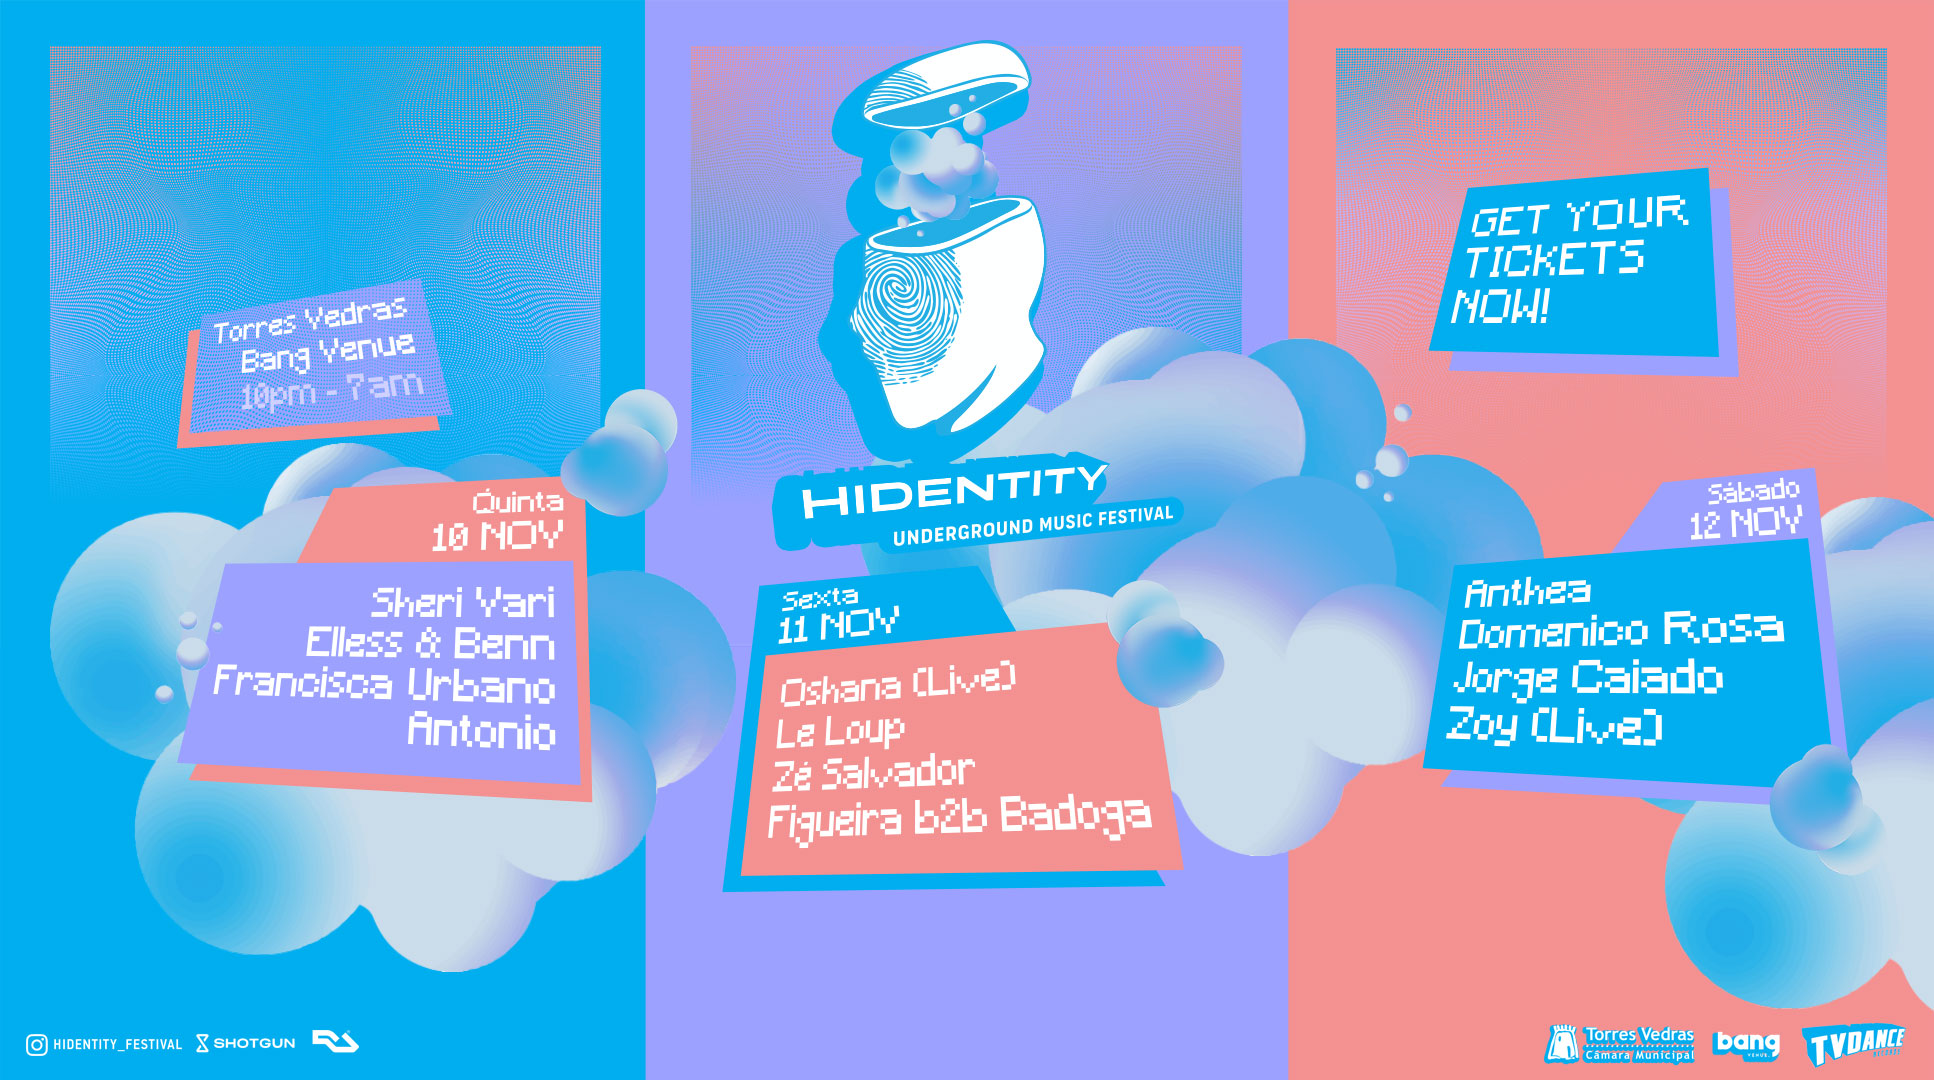 Hidentity (Underground Music Festival)